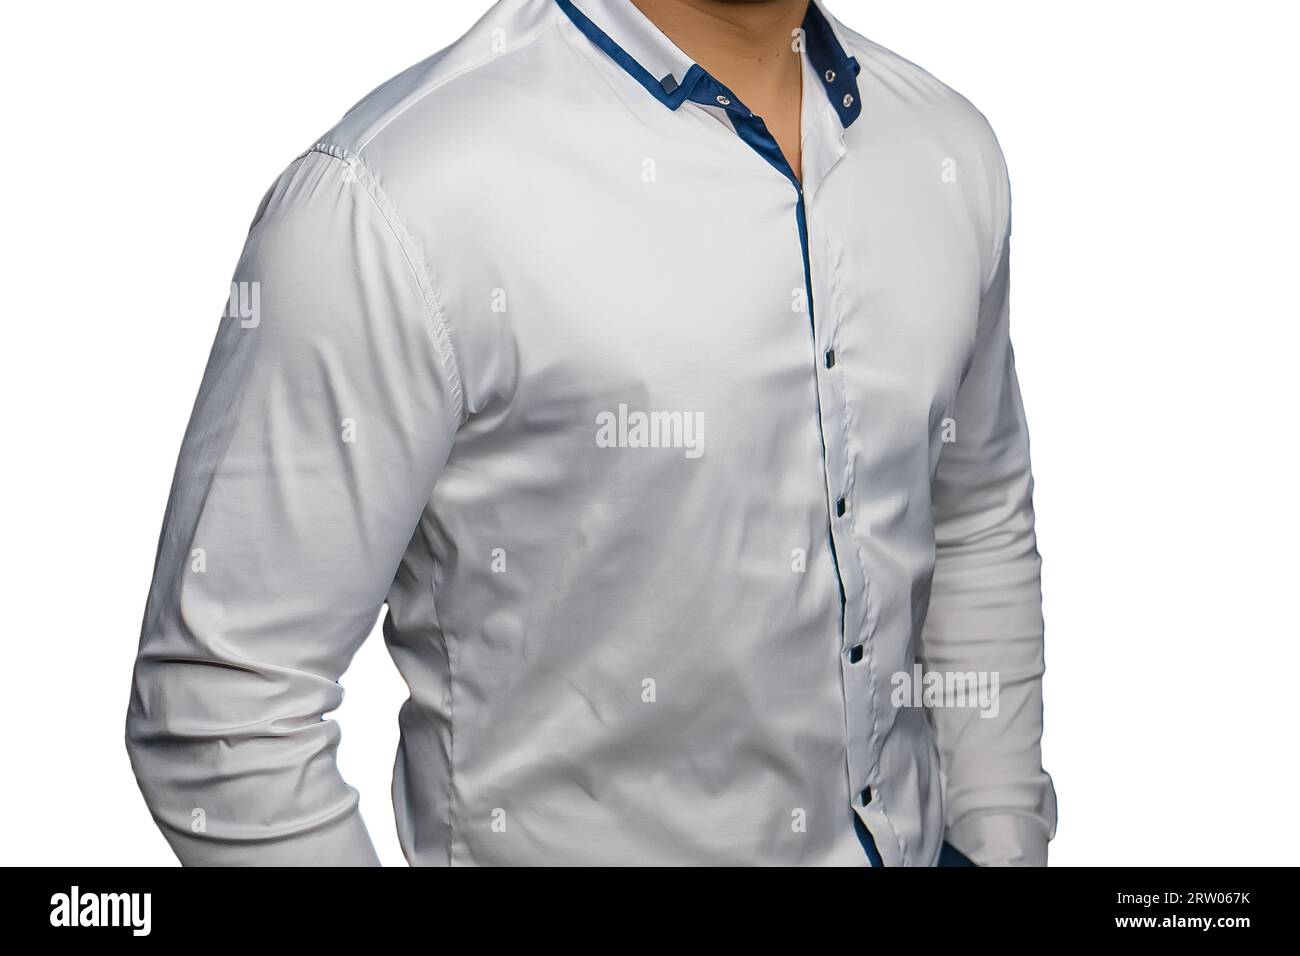 Men's style fashionable business wear white shirt on isolated background. Stock Photo